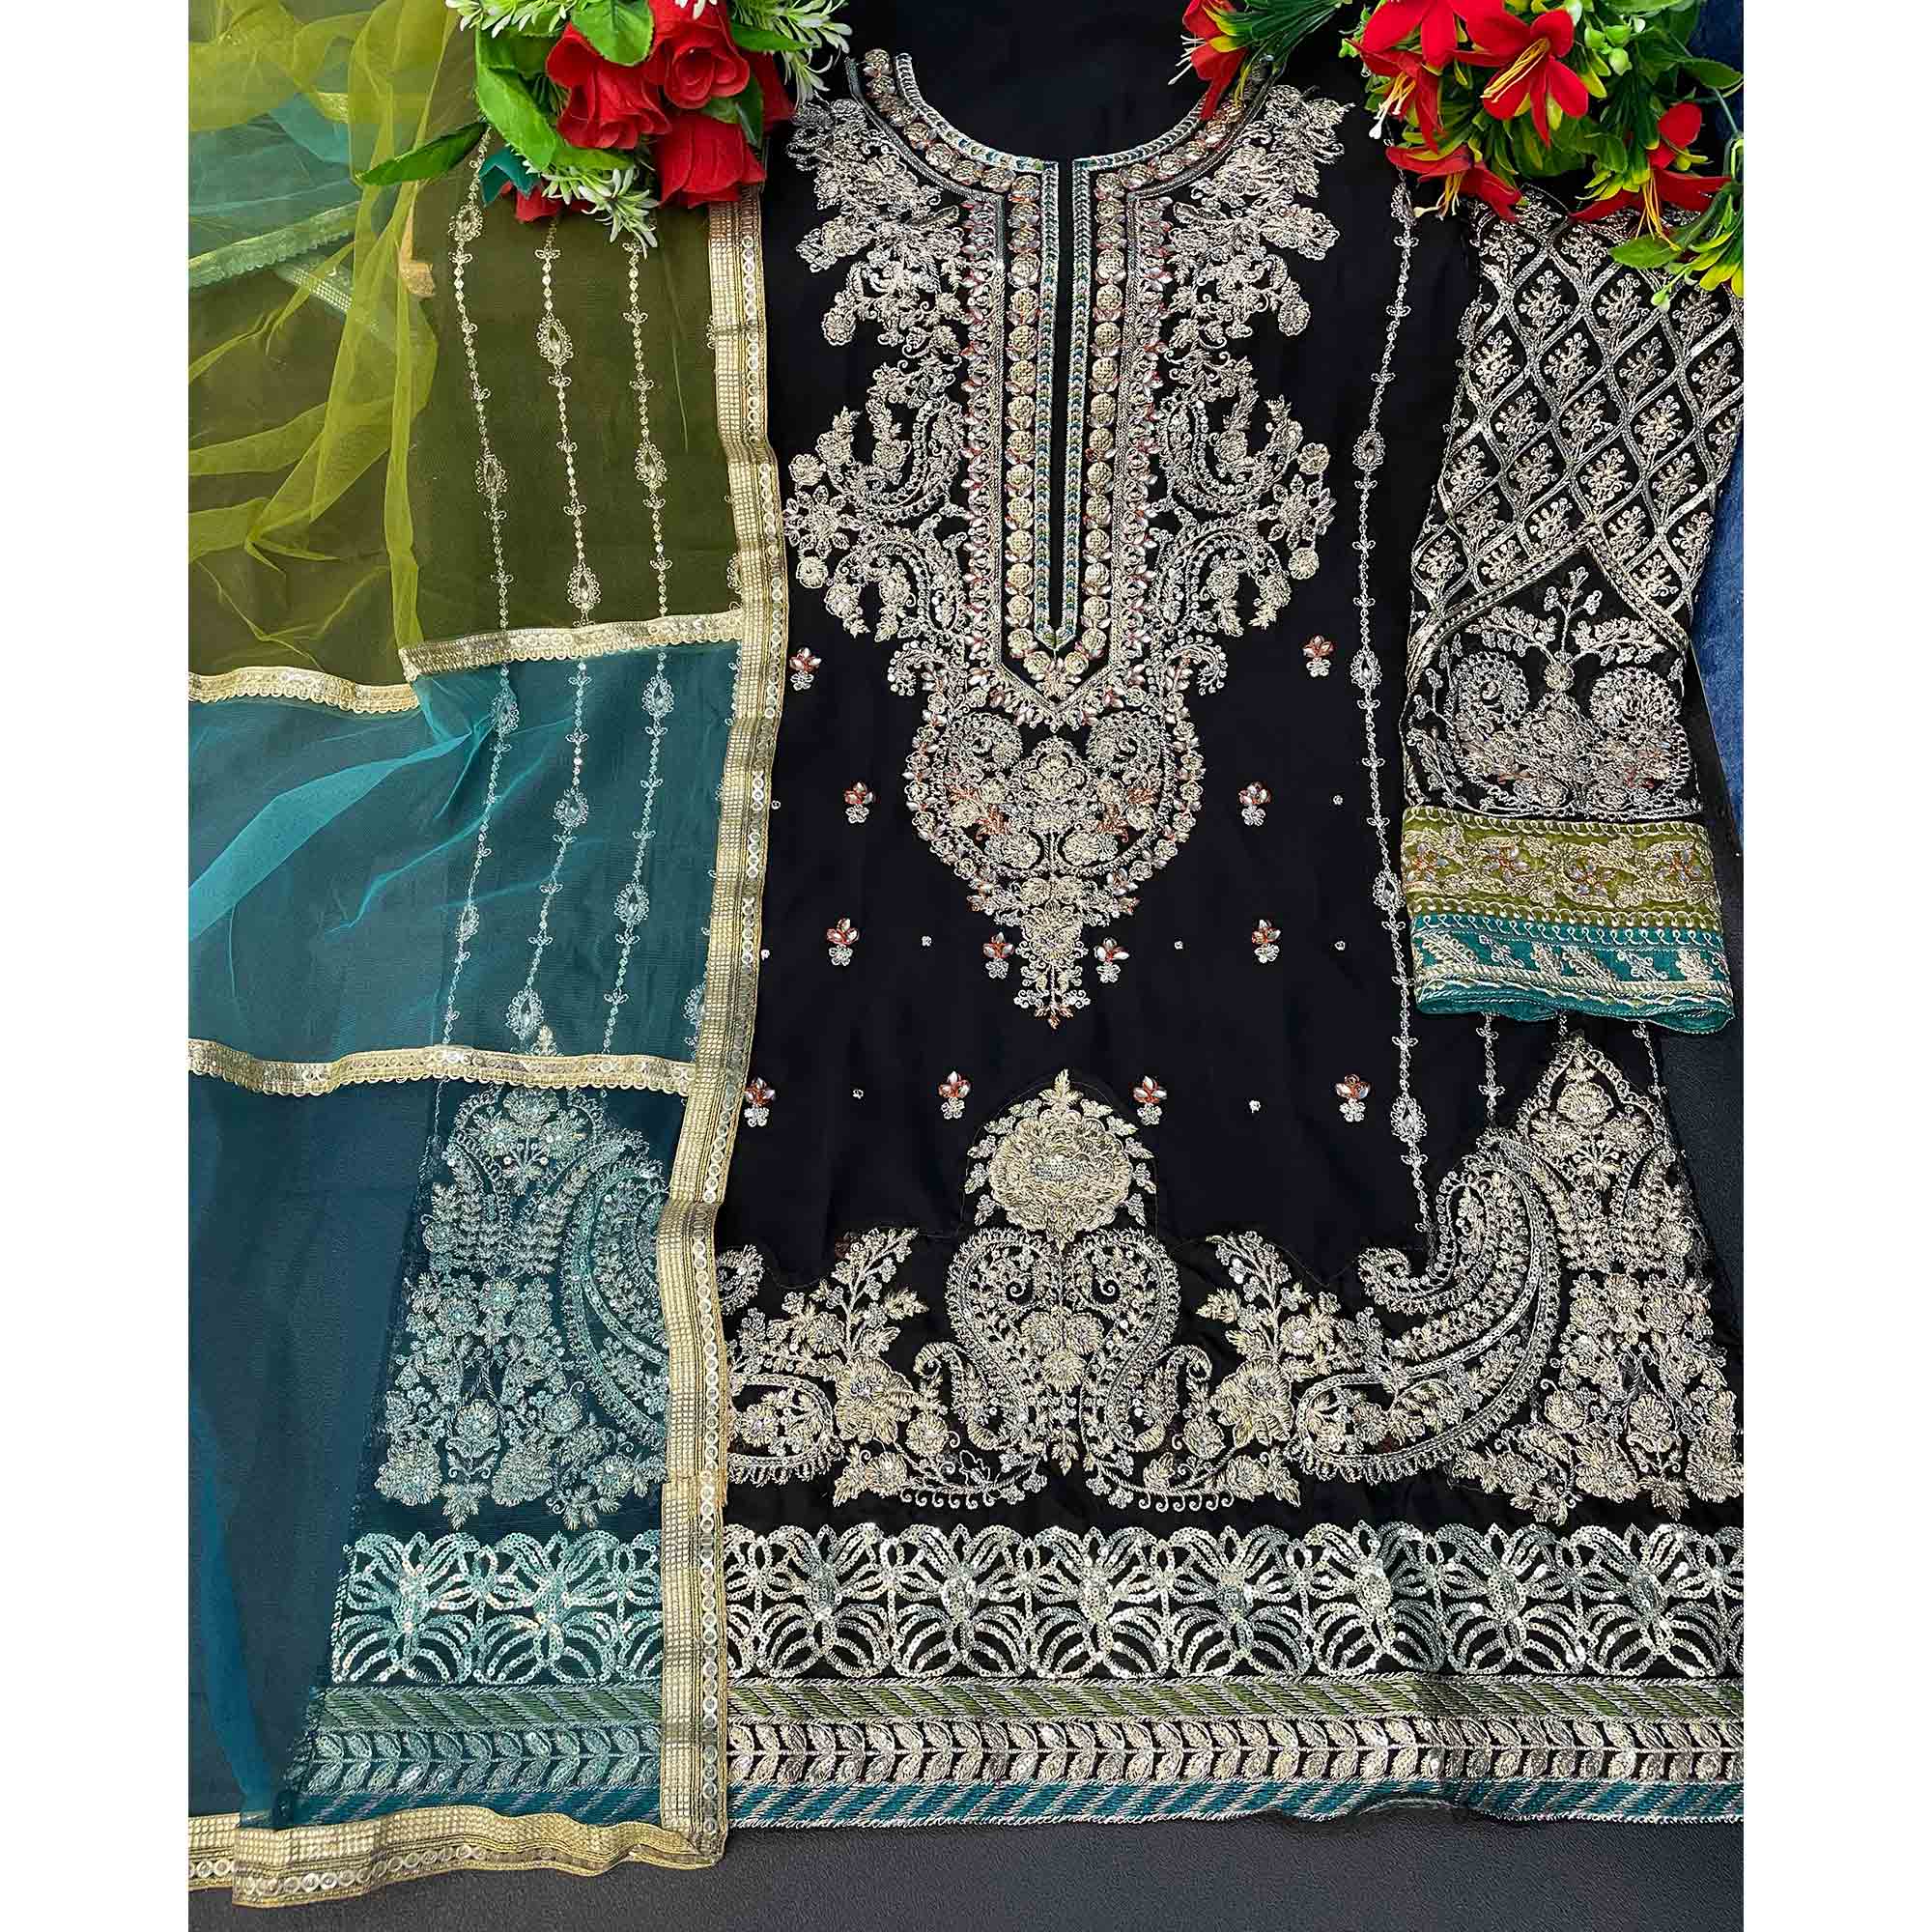 Black Floral Embroidered Georgette Pakistani Suit